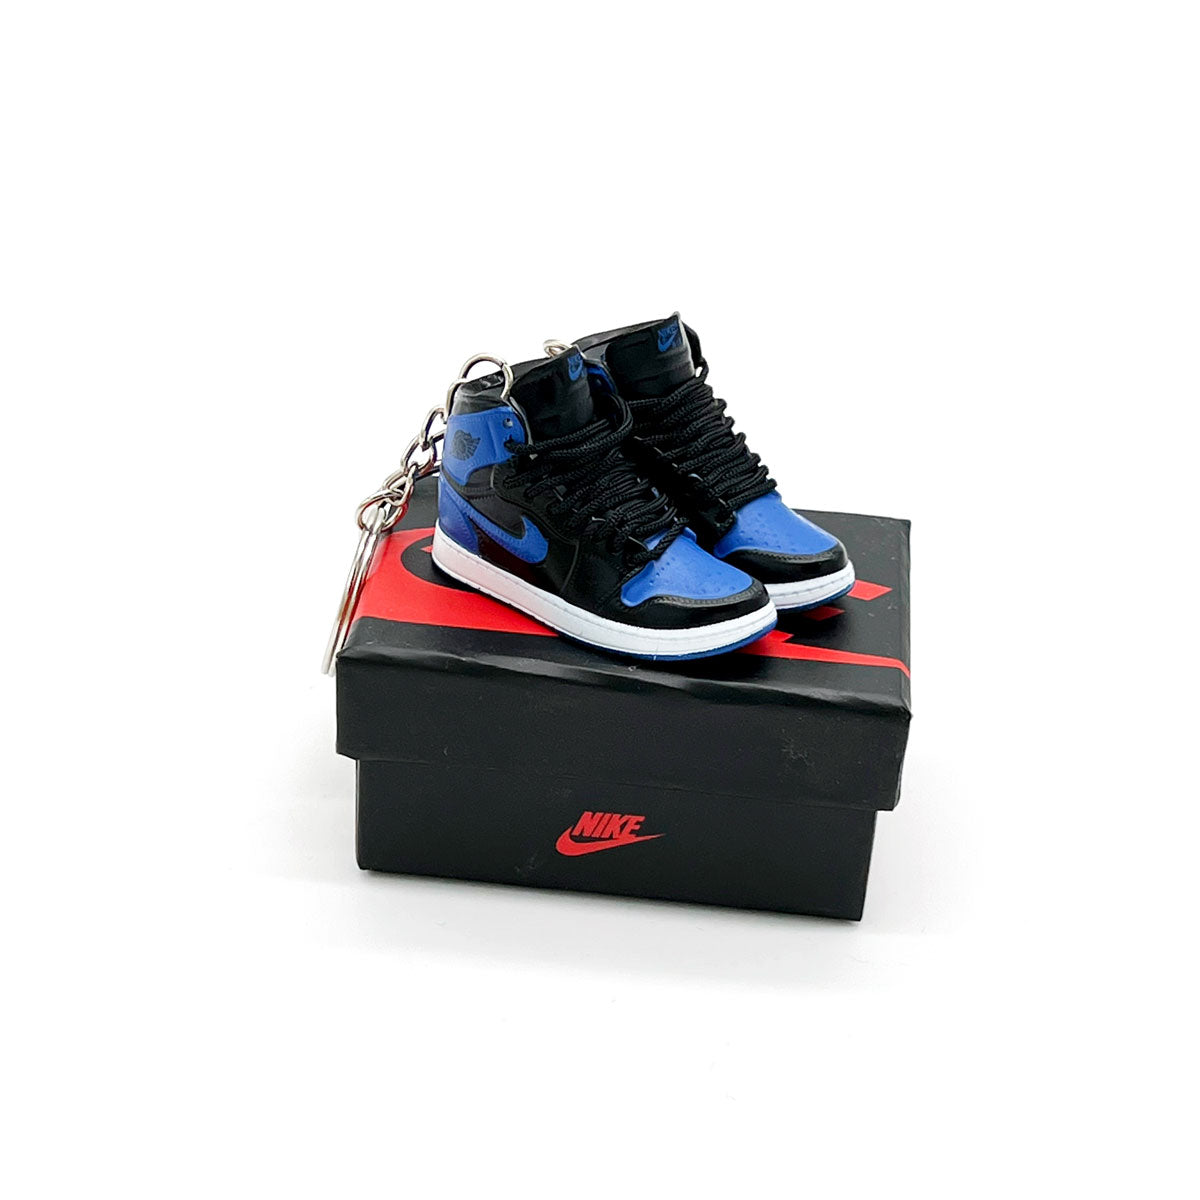 3D Sneaker Keychain- Air Jordan 1 High Royal Blue Pair - KickzStore